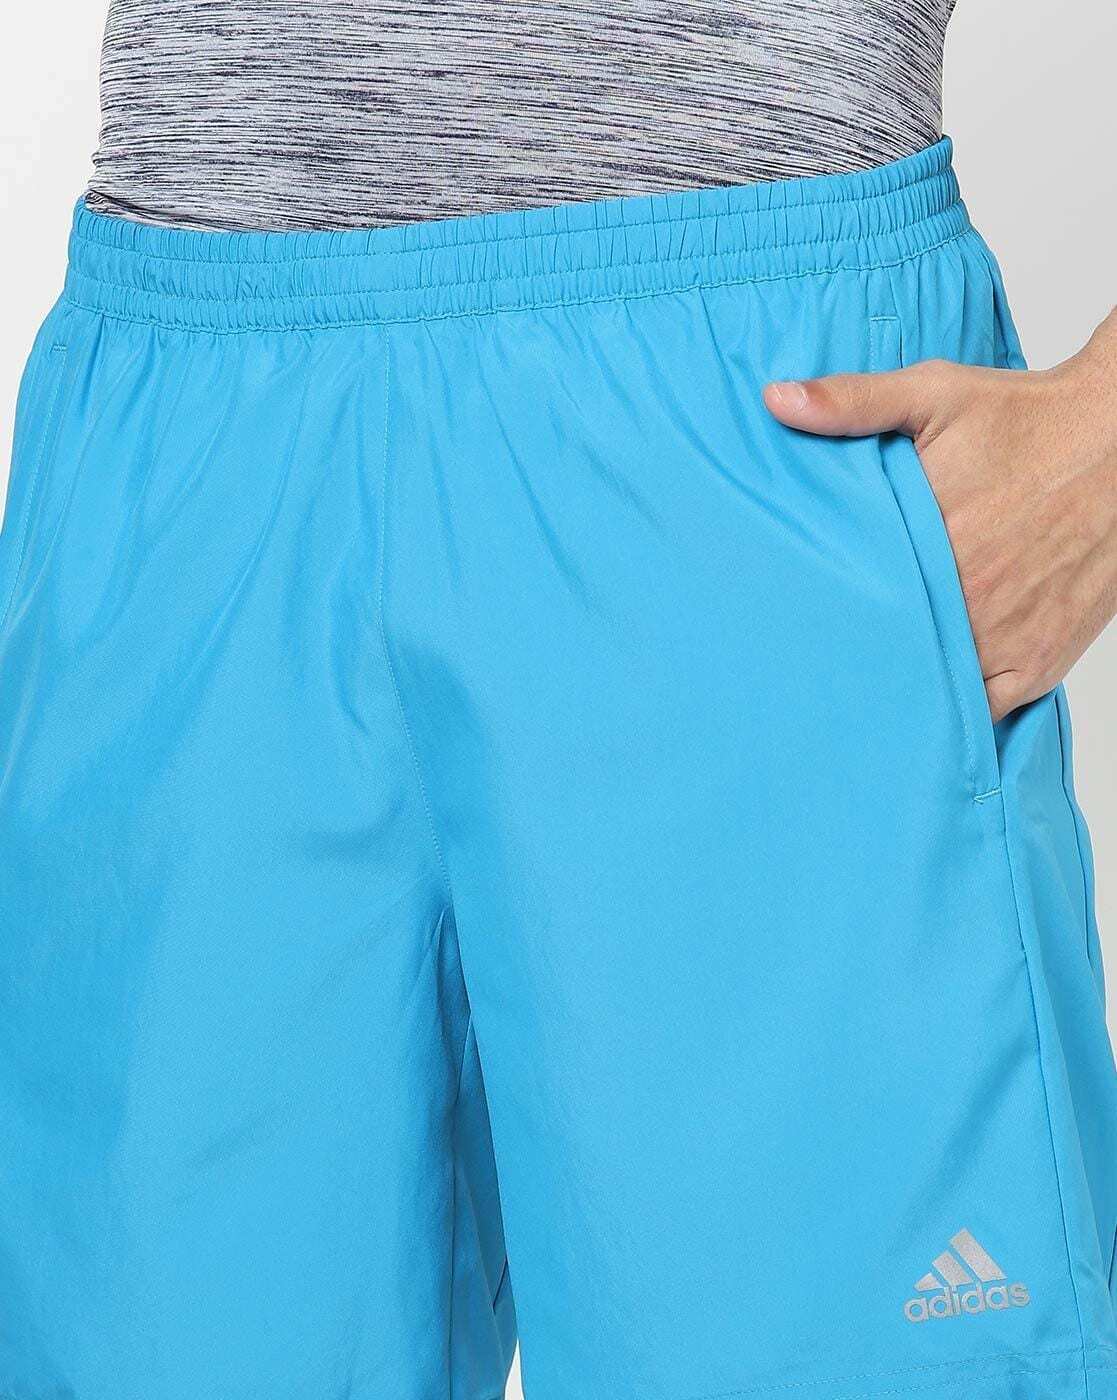 Flat-Front Shorts with Insert Pockets-Ha8570